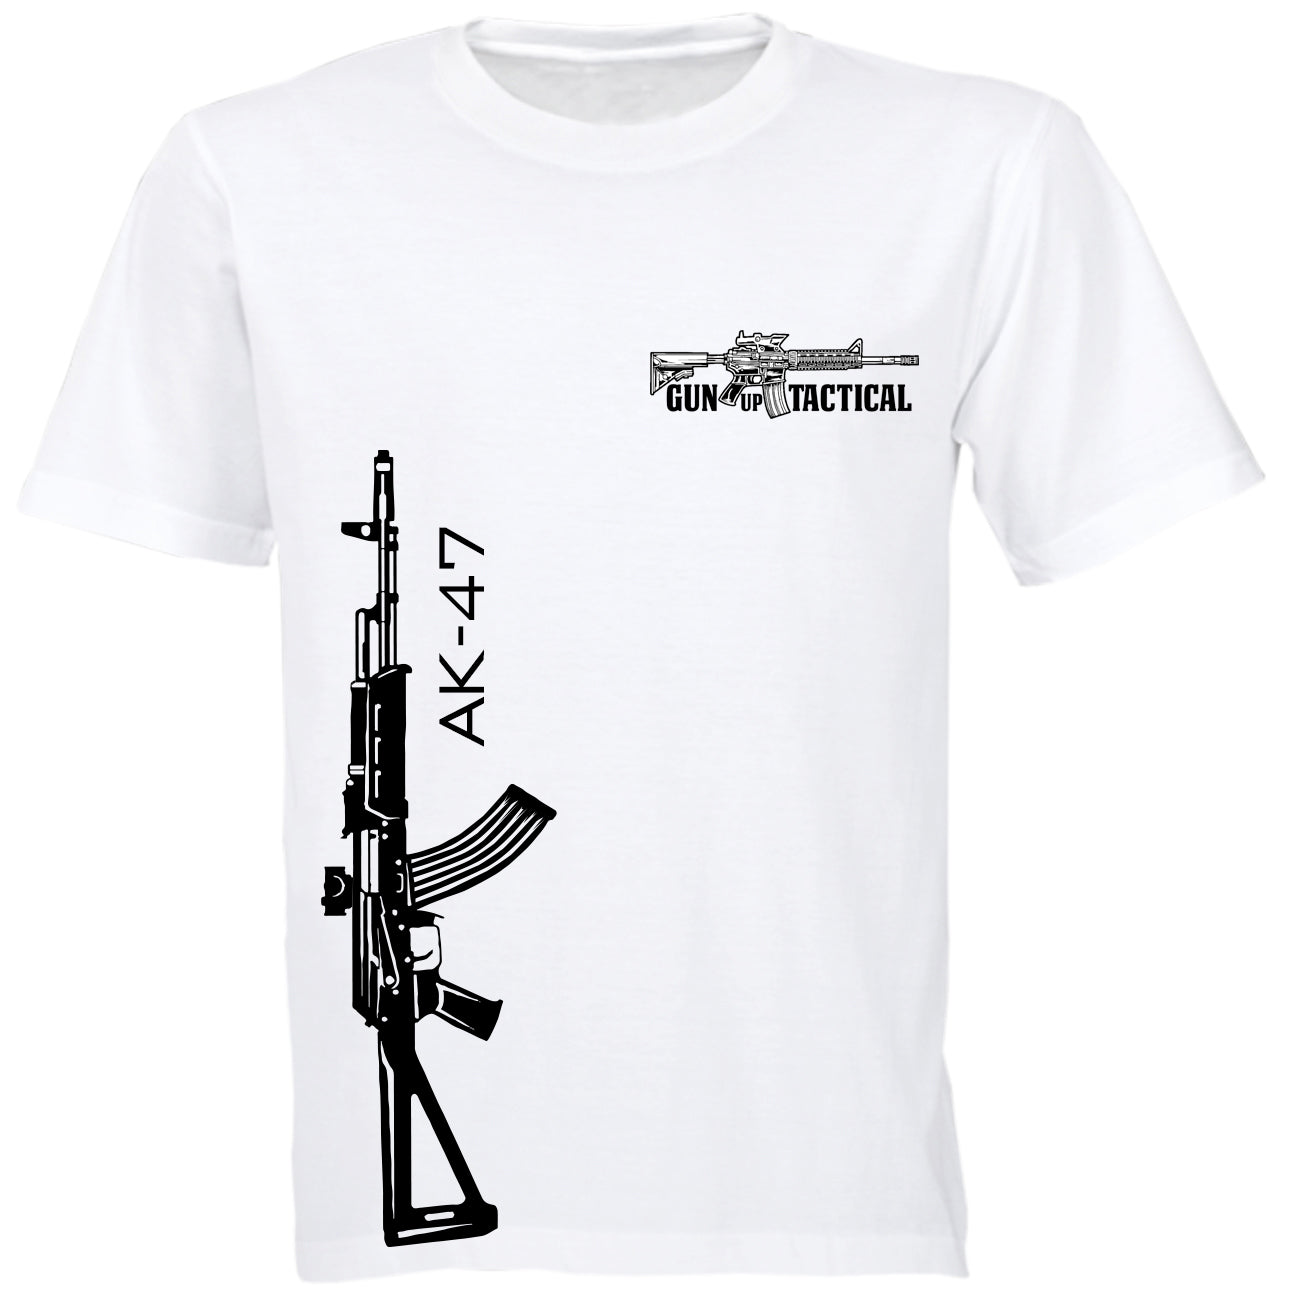 AK-47 T-Shirt - Gun Up Tactical